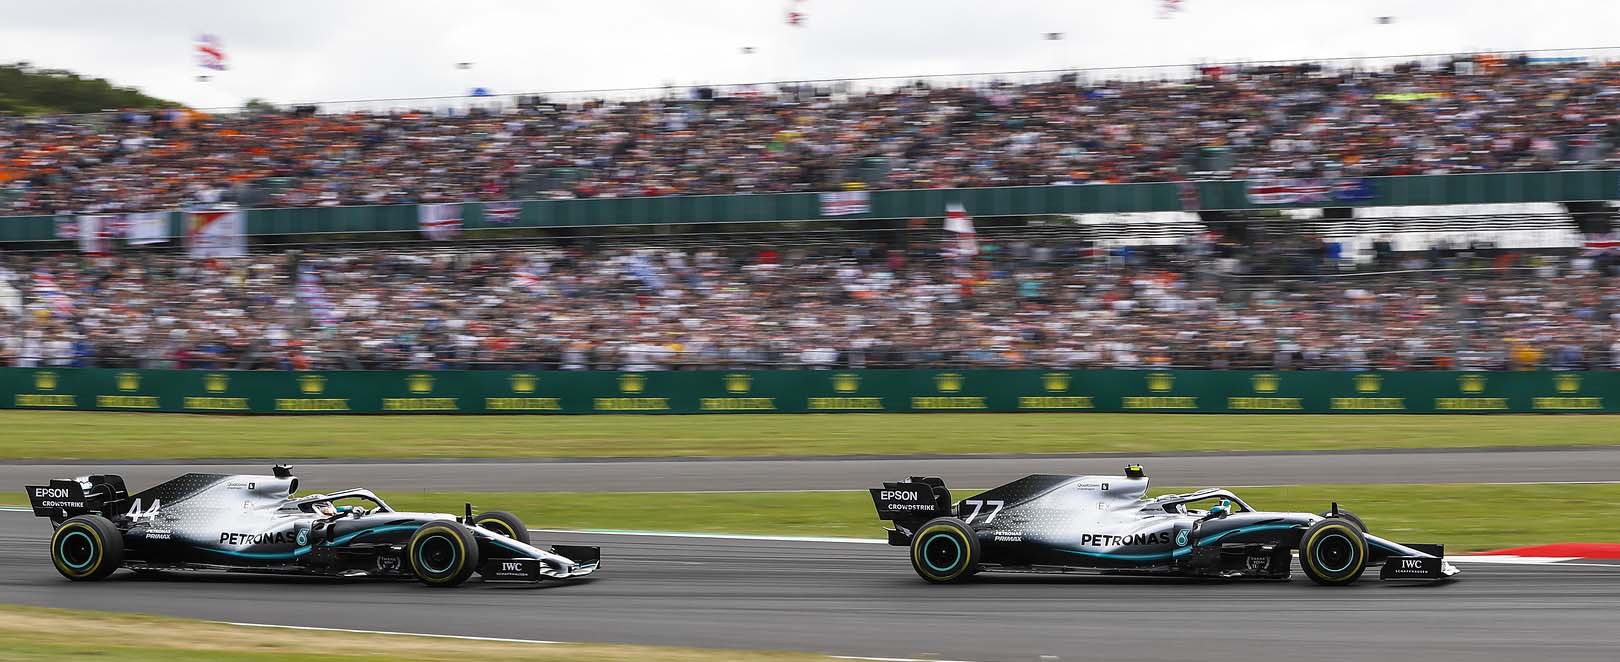 Lewis Hamilton battling with Valtteri Bottas during the 2019 British Grand Prix at Silverstone